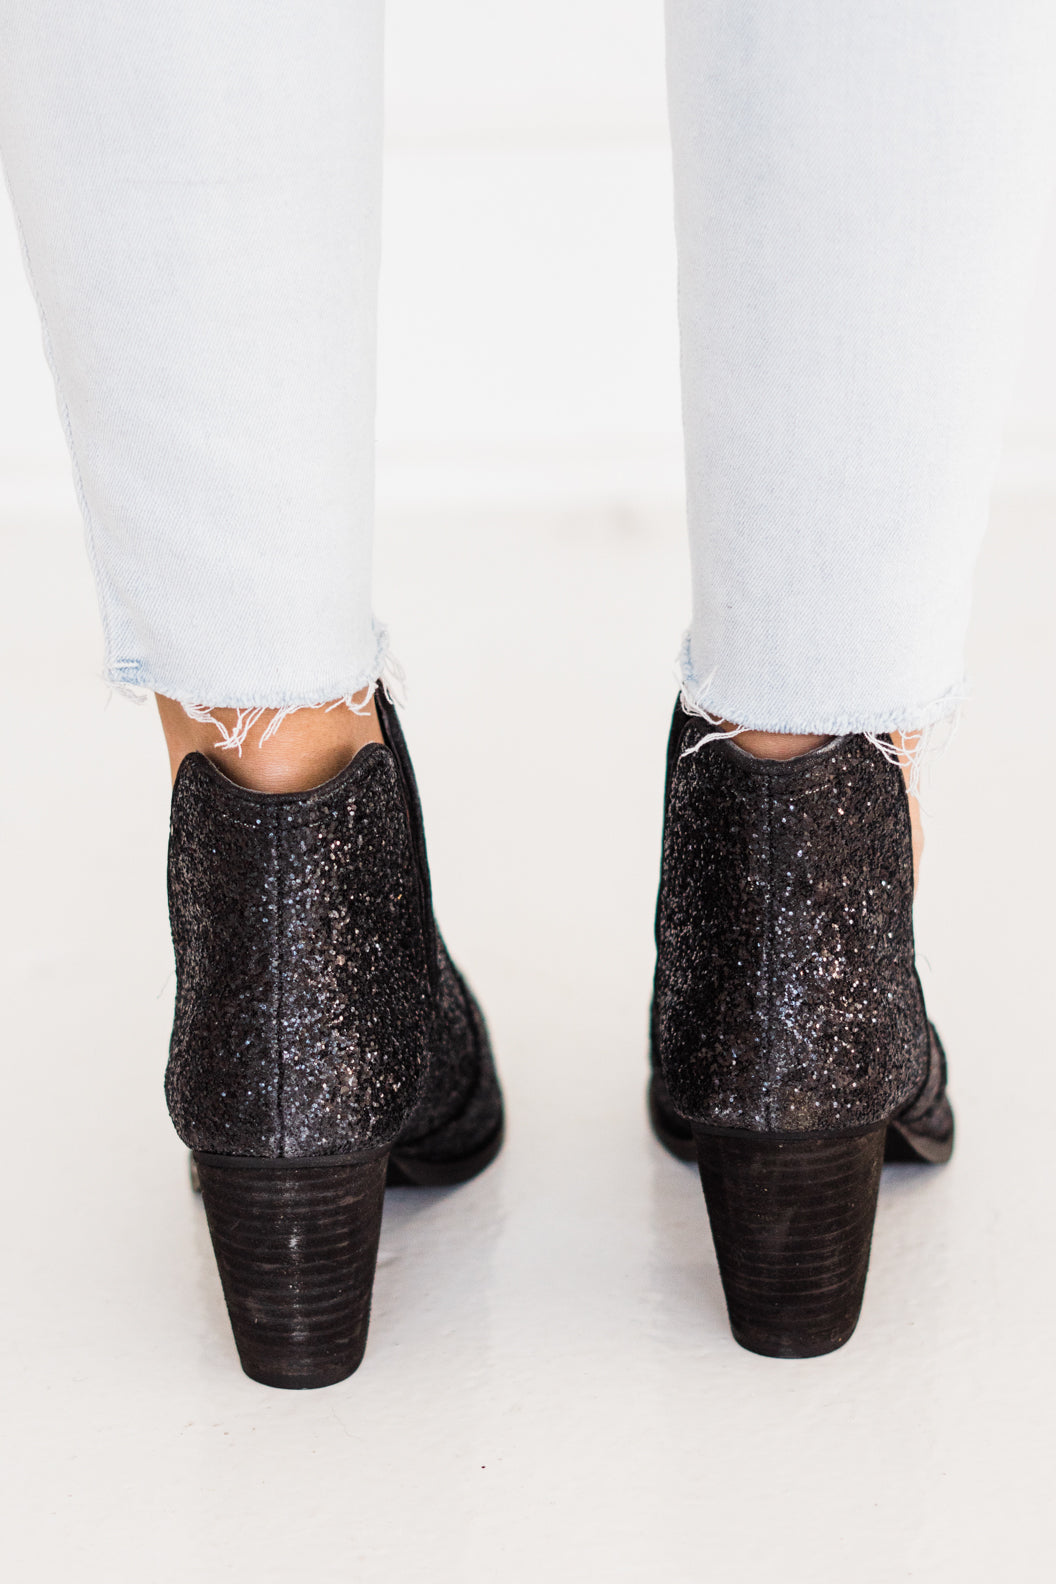 Anastasia Glitter Ankle Booties in Black   